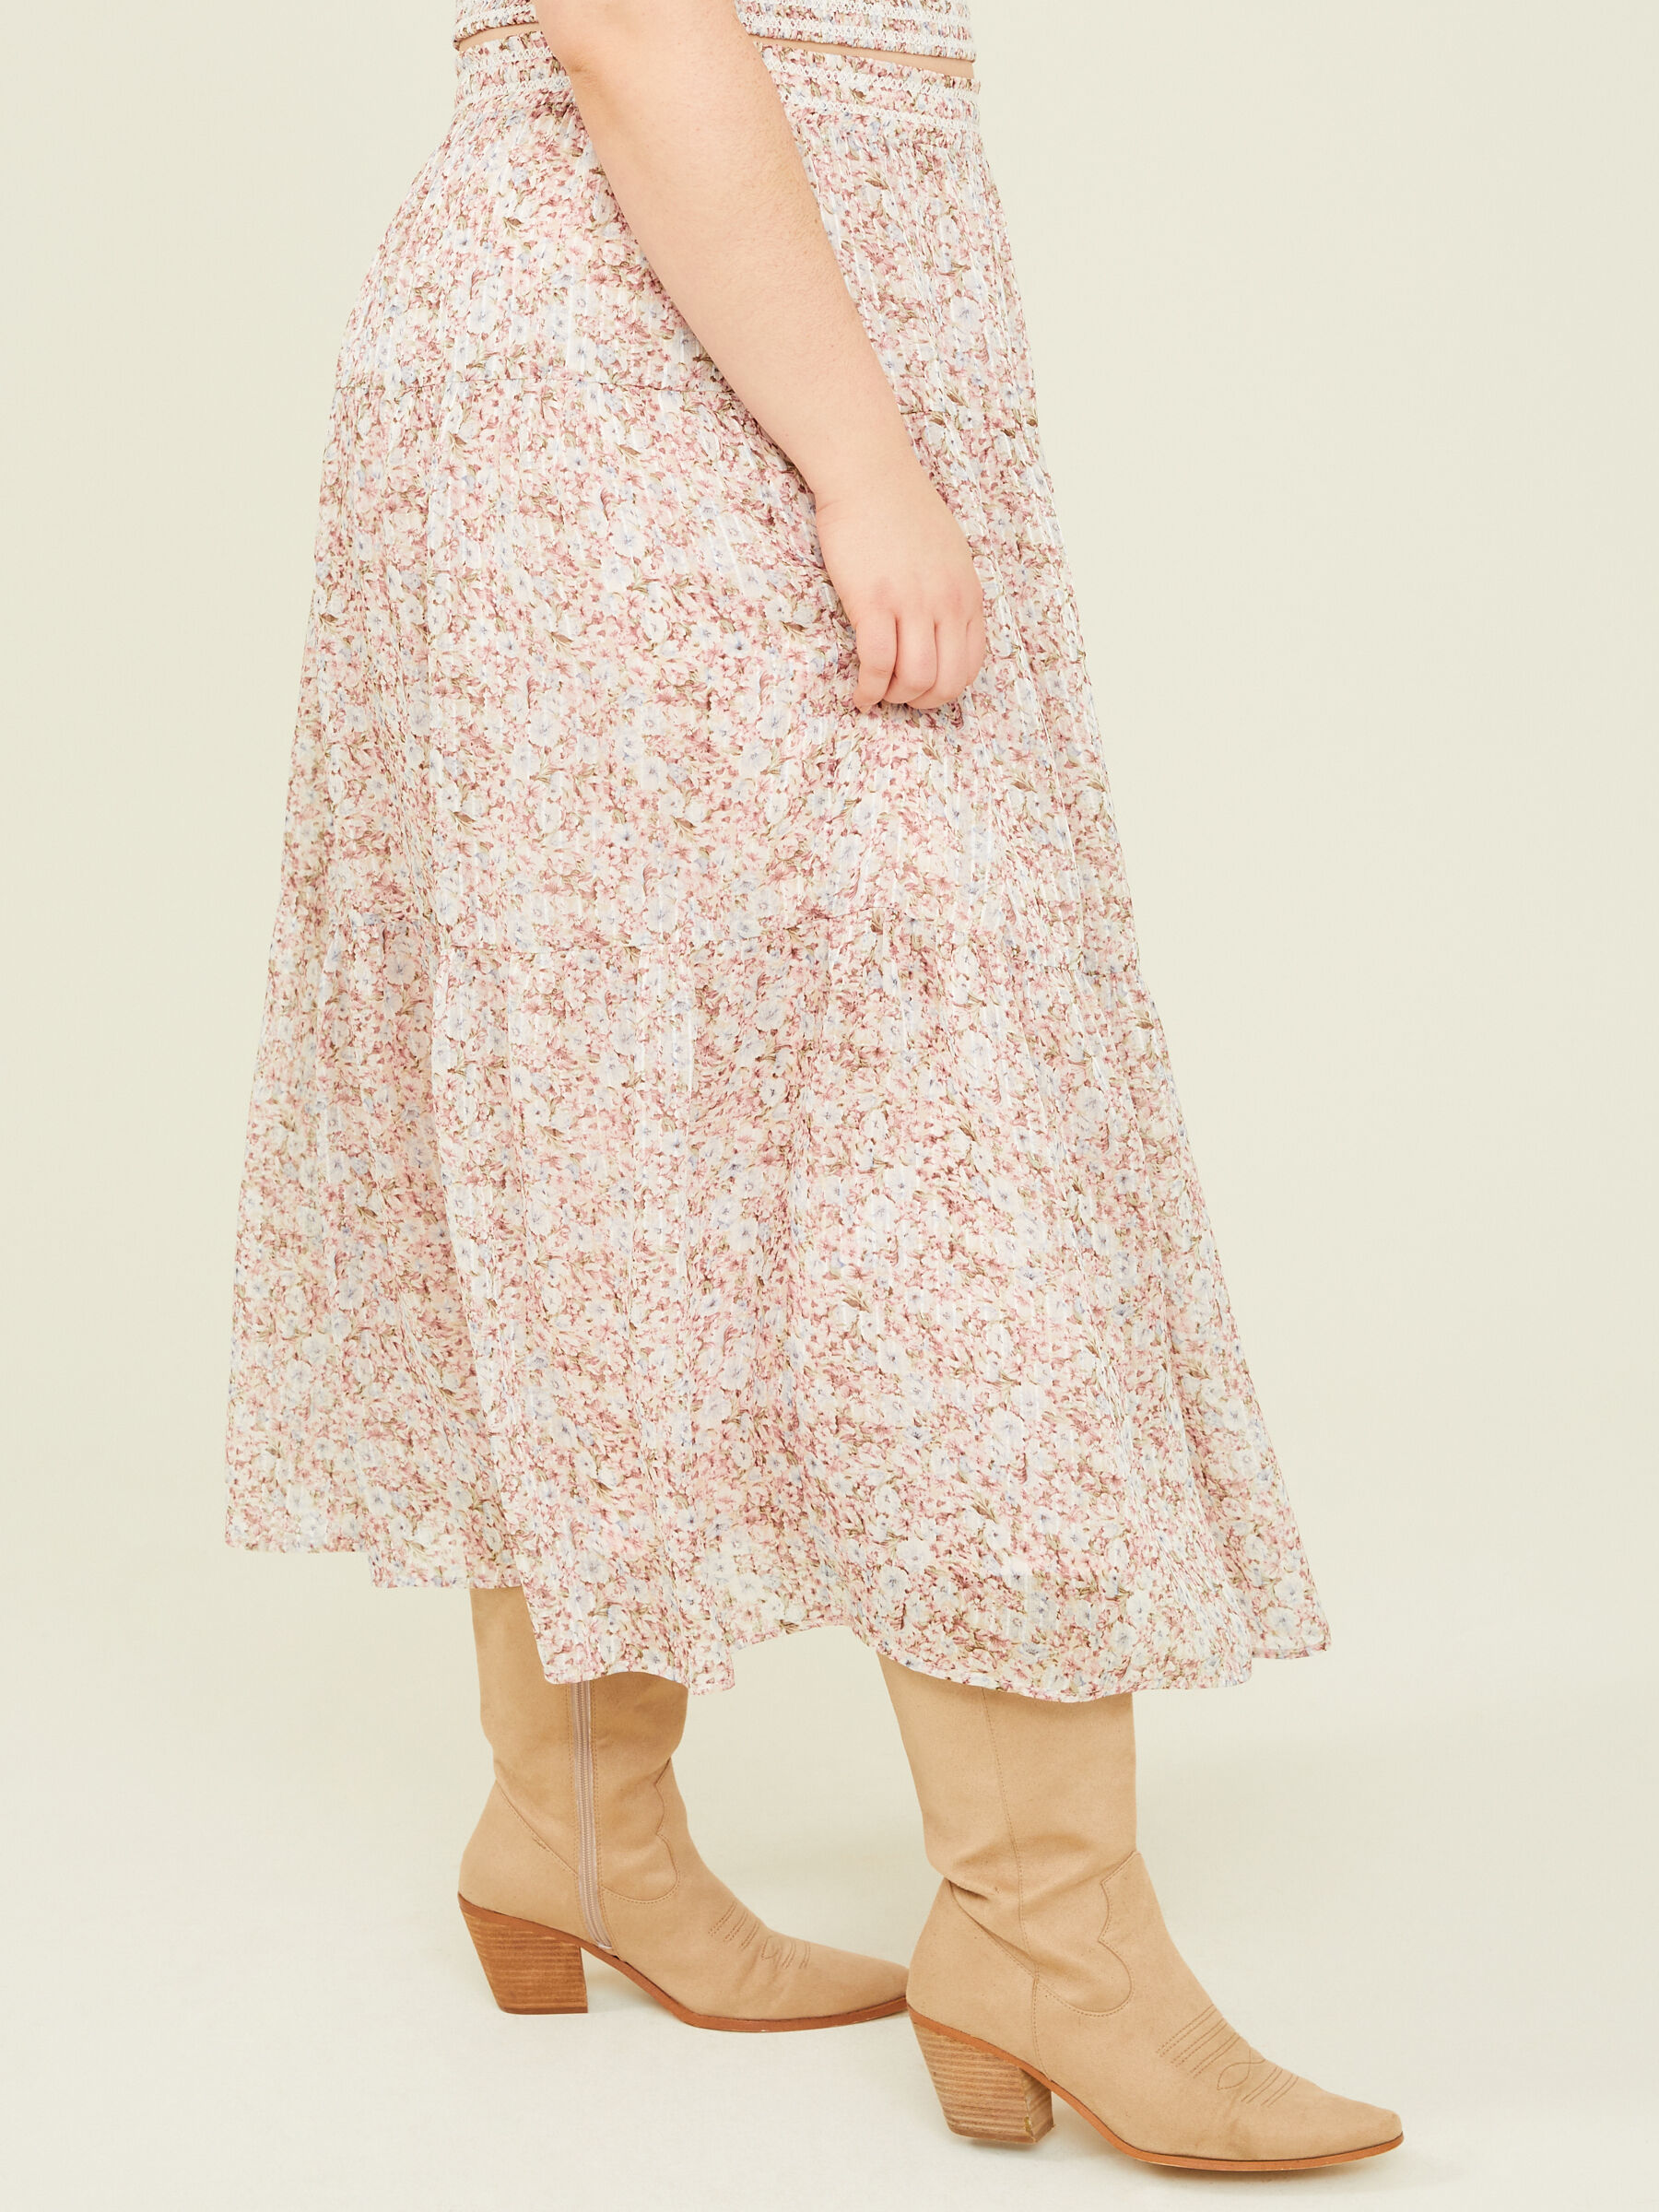 Bella Floral Maxi Skirt